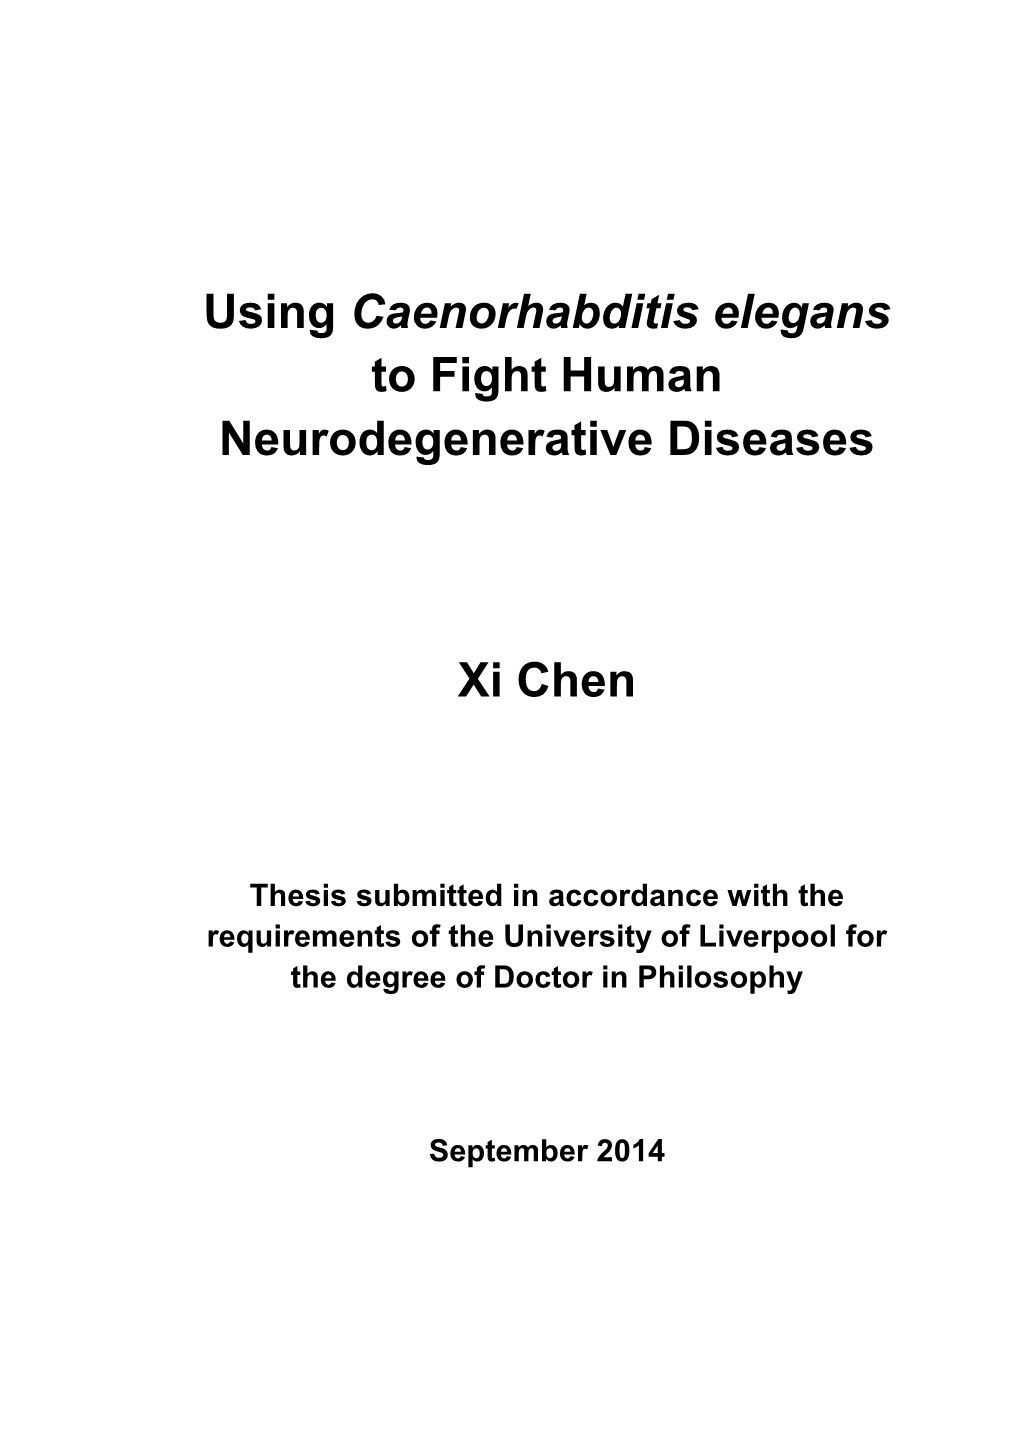 Using Caenorhabditis Elegans to Fight Human Neurodegenerative Diseases